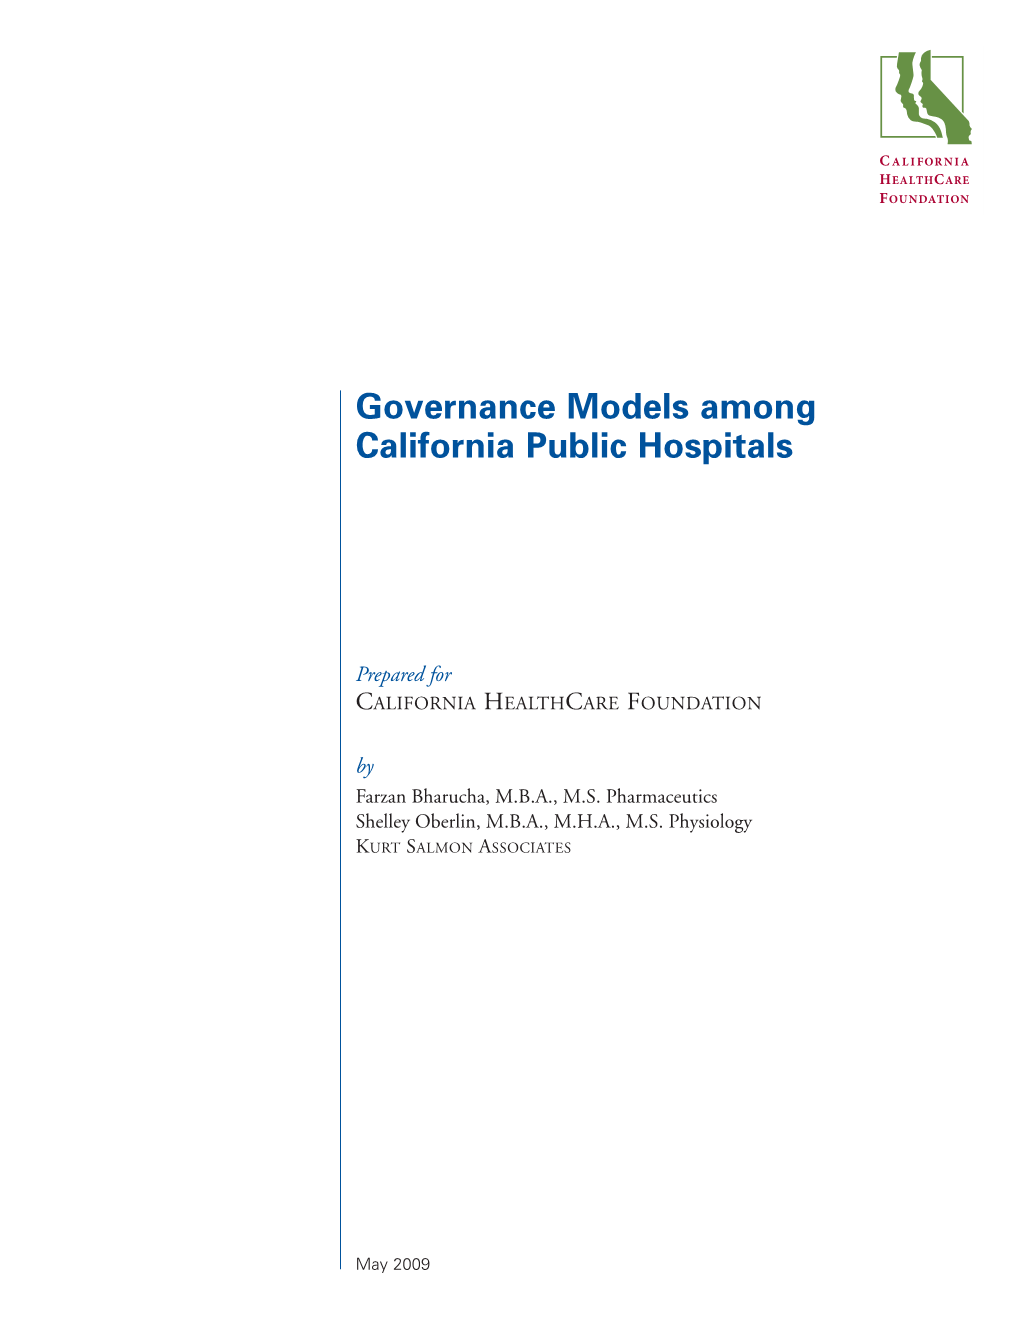 Governance Models Among California Public Hospitals